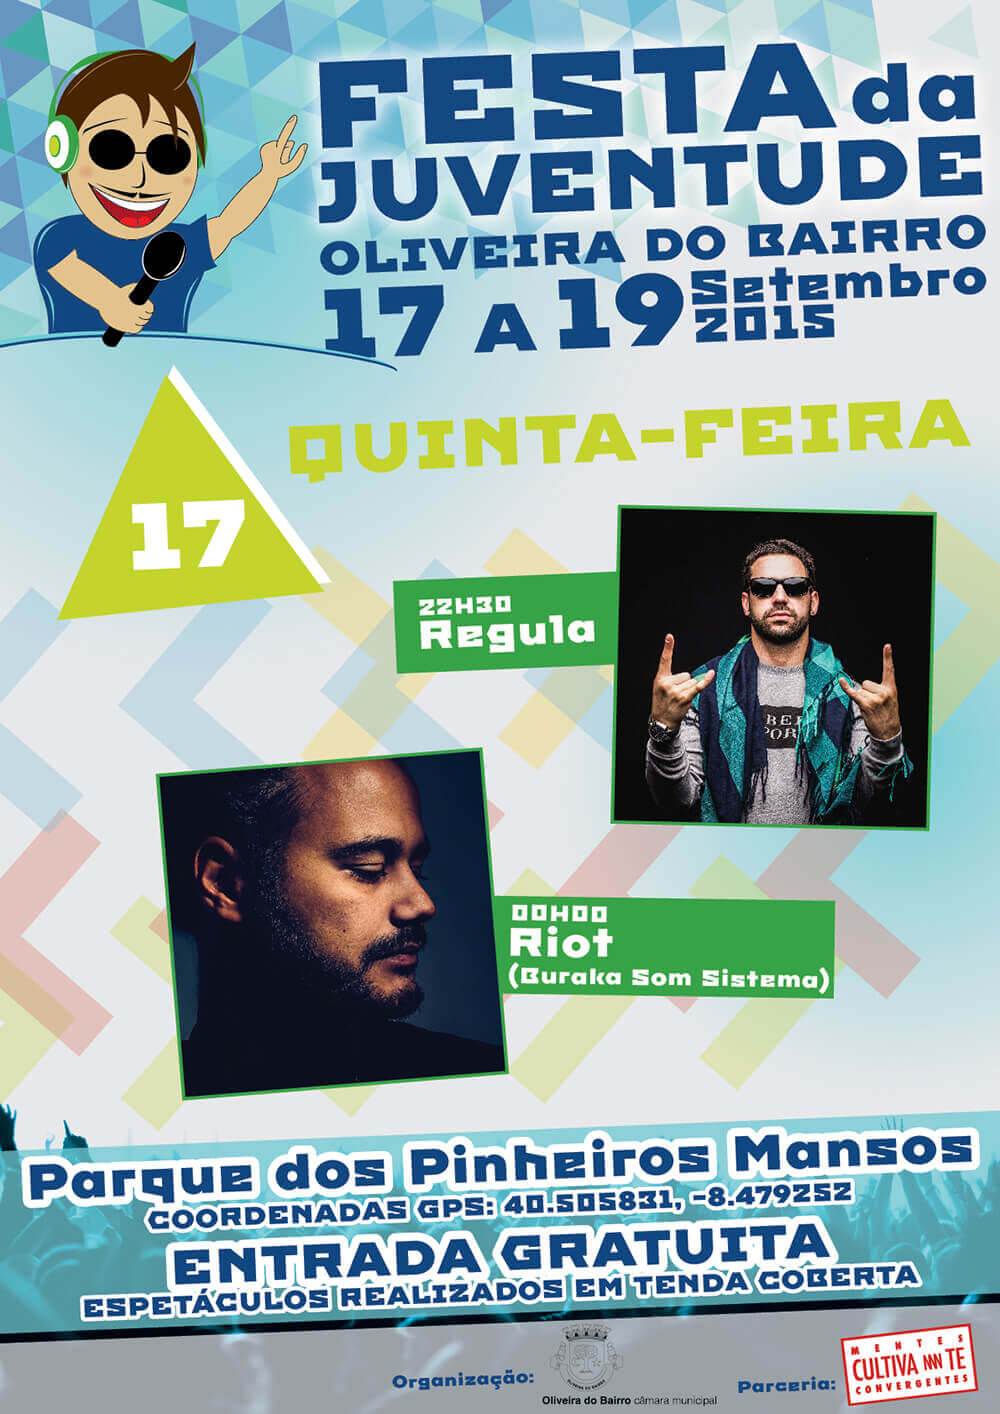 Festa da Juventude de Oliveira do Bairro - Poster for the 17th day | Way2Start - Design & Digital Agency